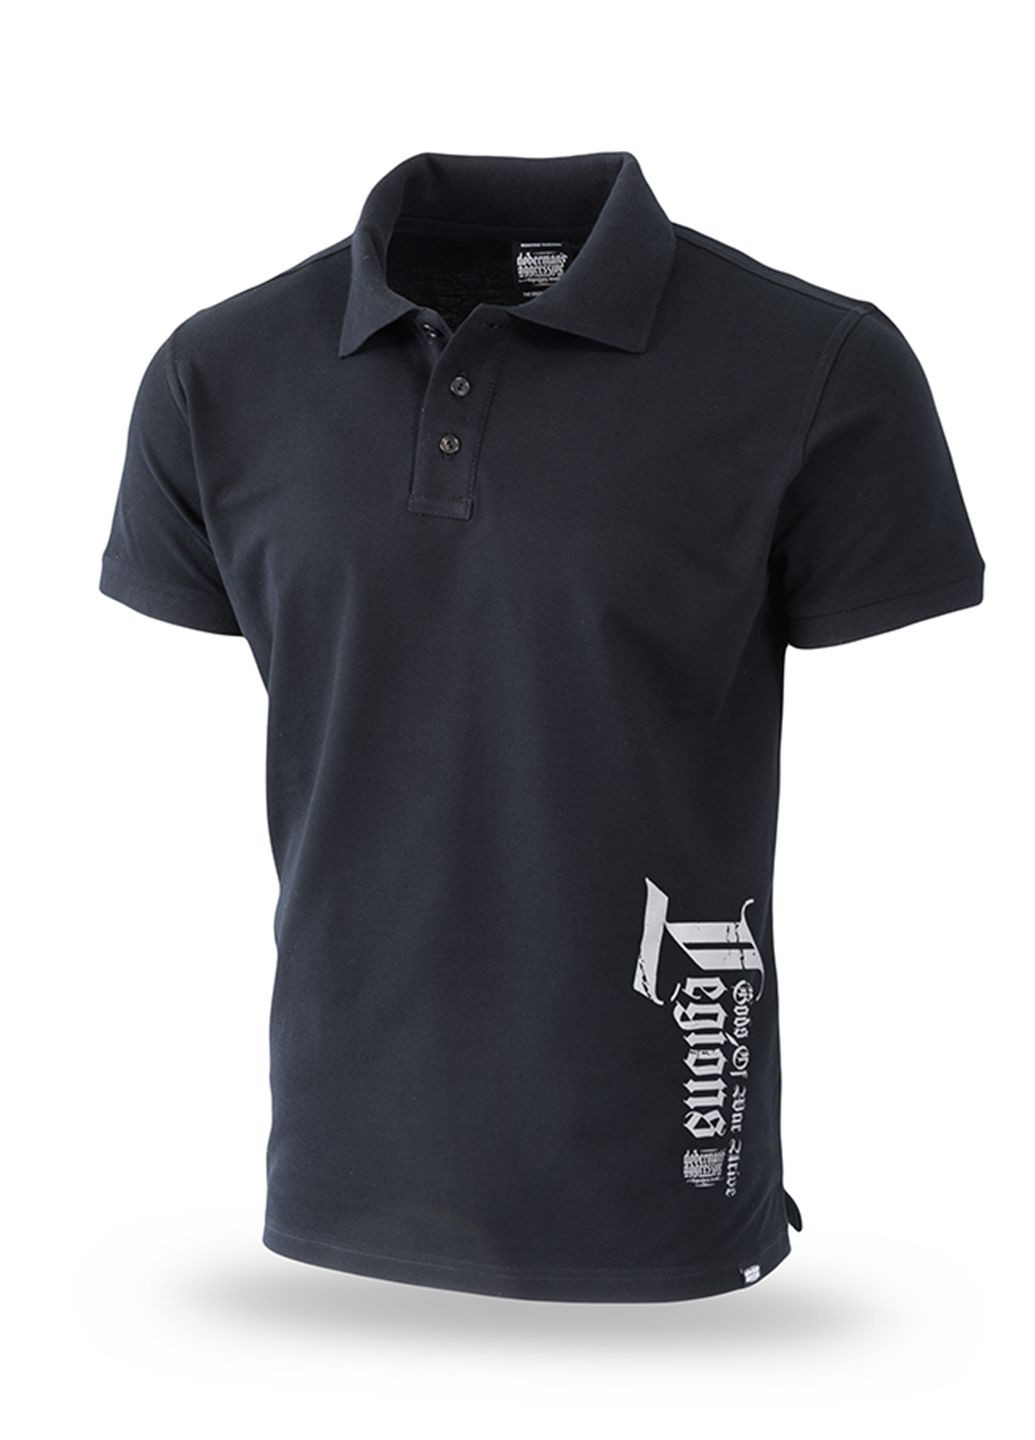 Черная футболка-футболка поло для мужчин Dobermans Aggressive с рисунком